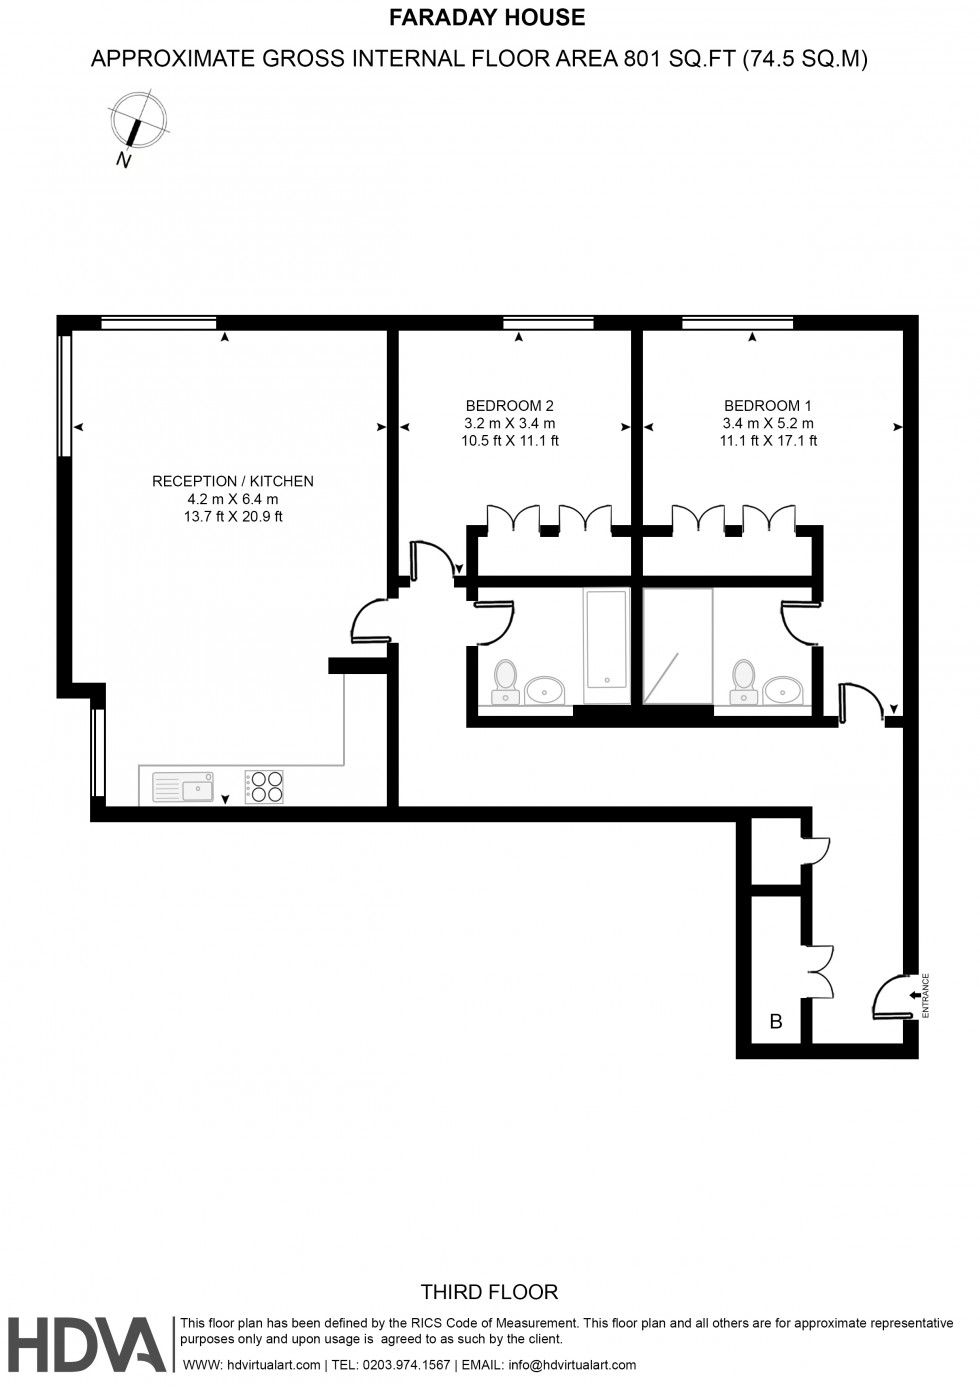 Floorplan for Faraday House, 30 Blandford Street, London